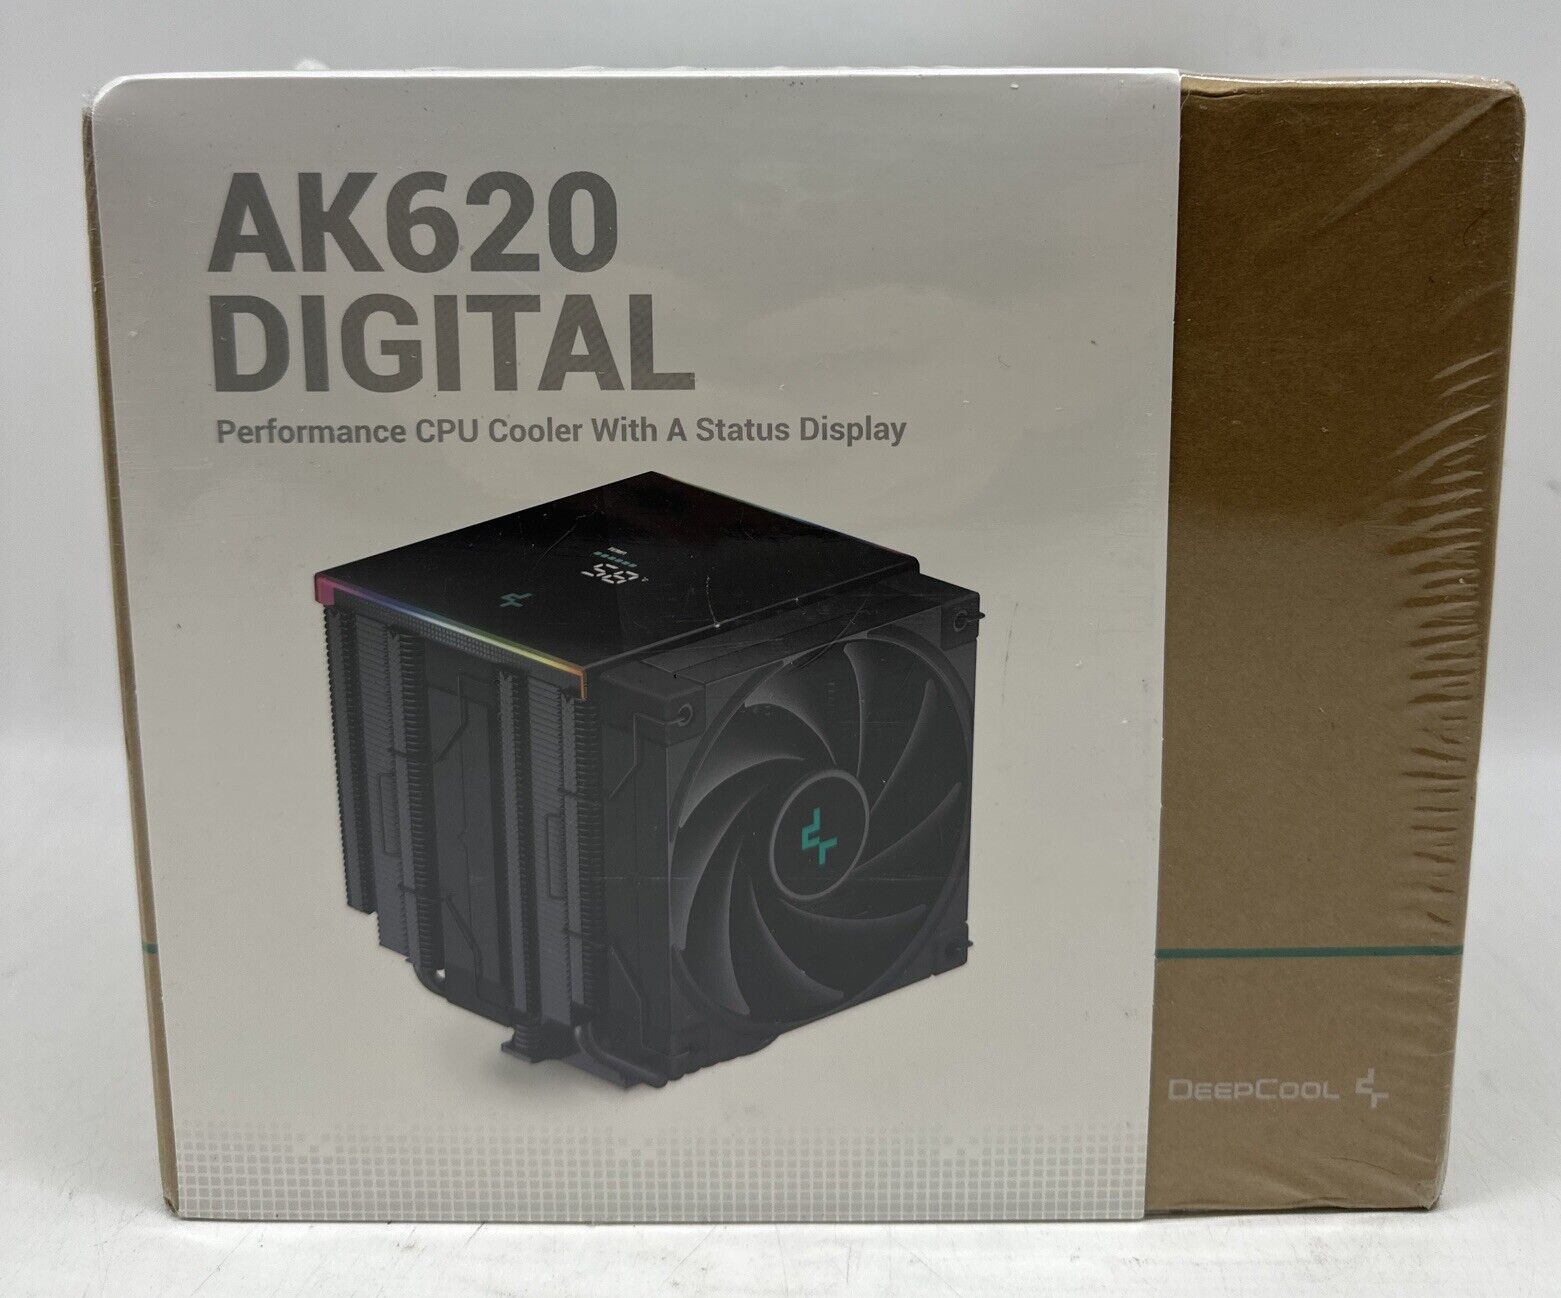 DeepCool AK620 Digital Performance CPU Cooler With A Status Display